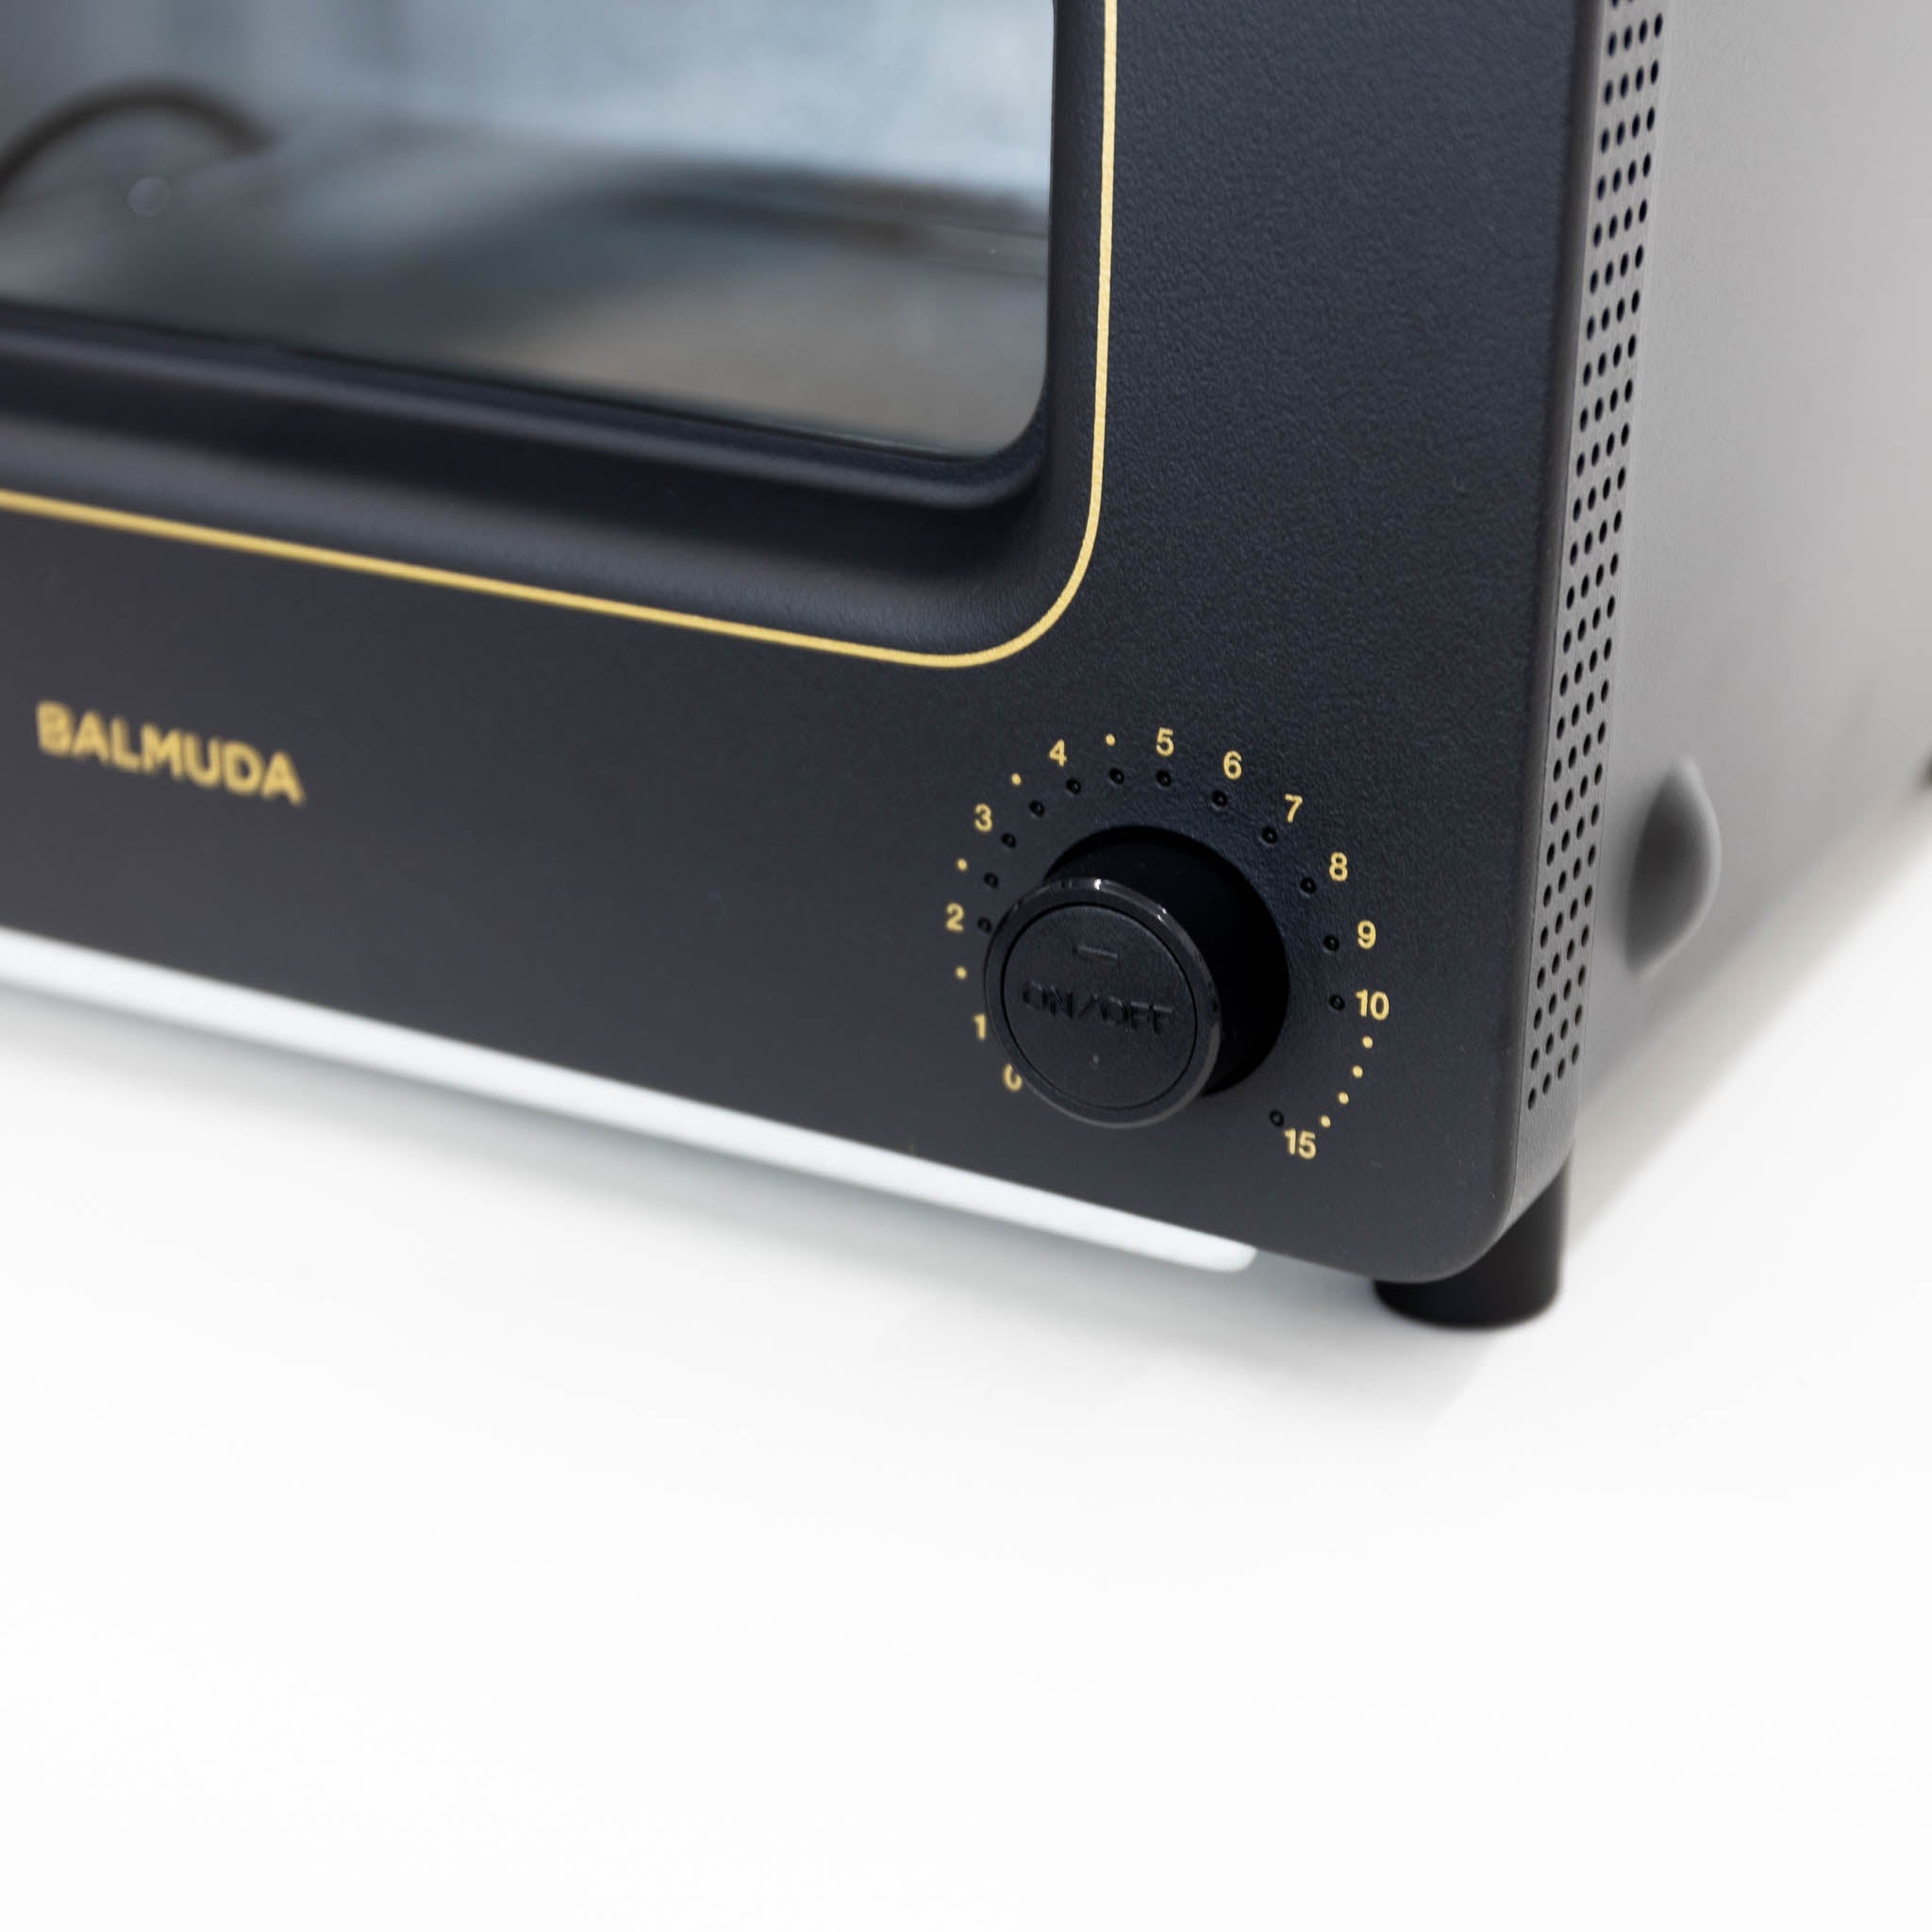 BALMUDA - The Toaster